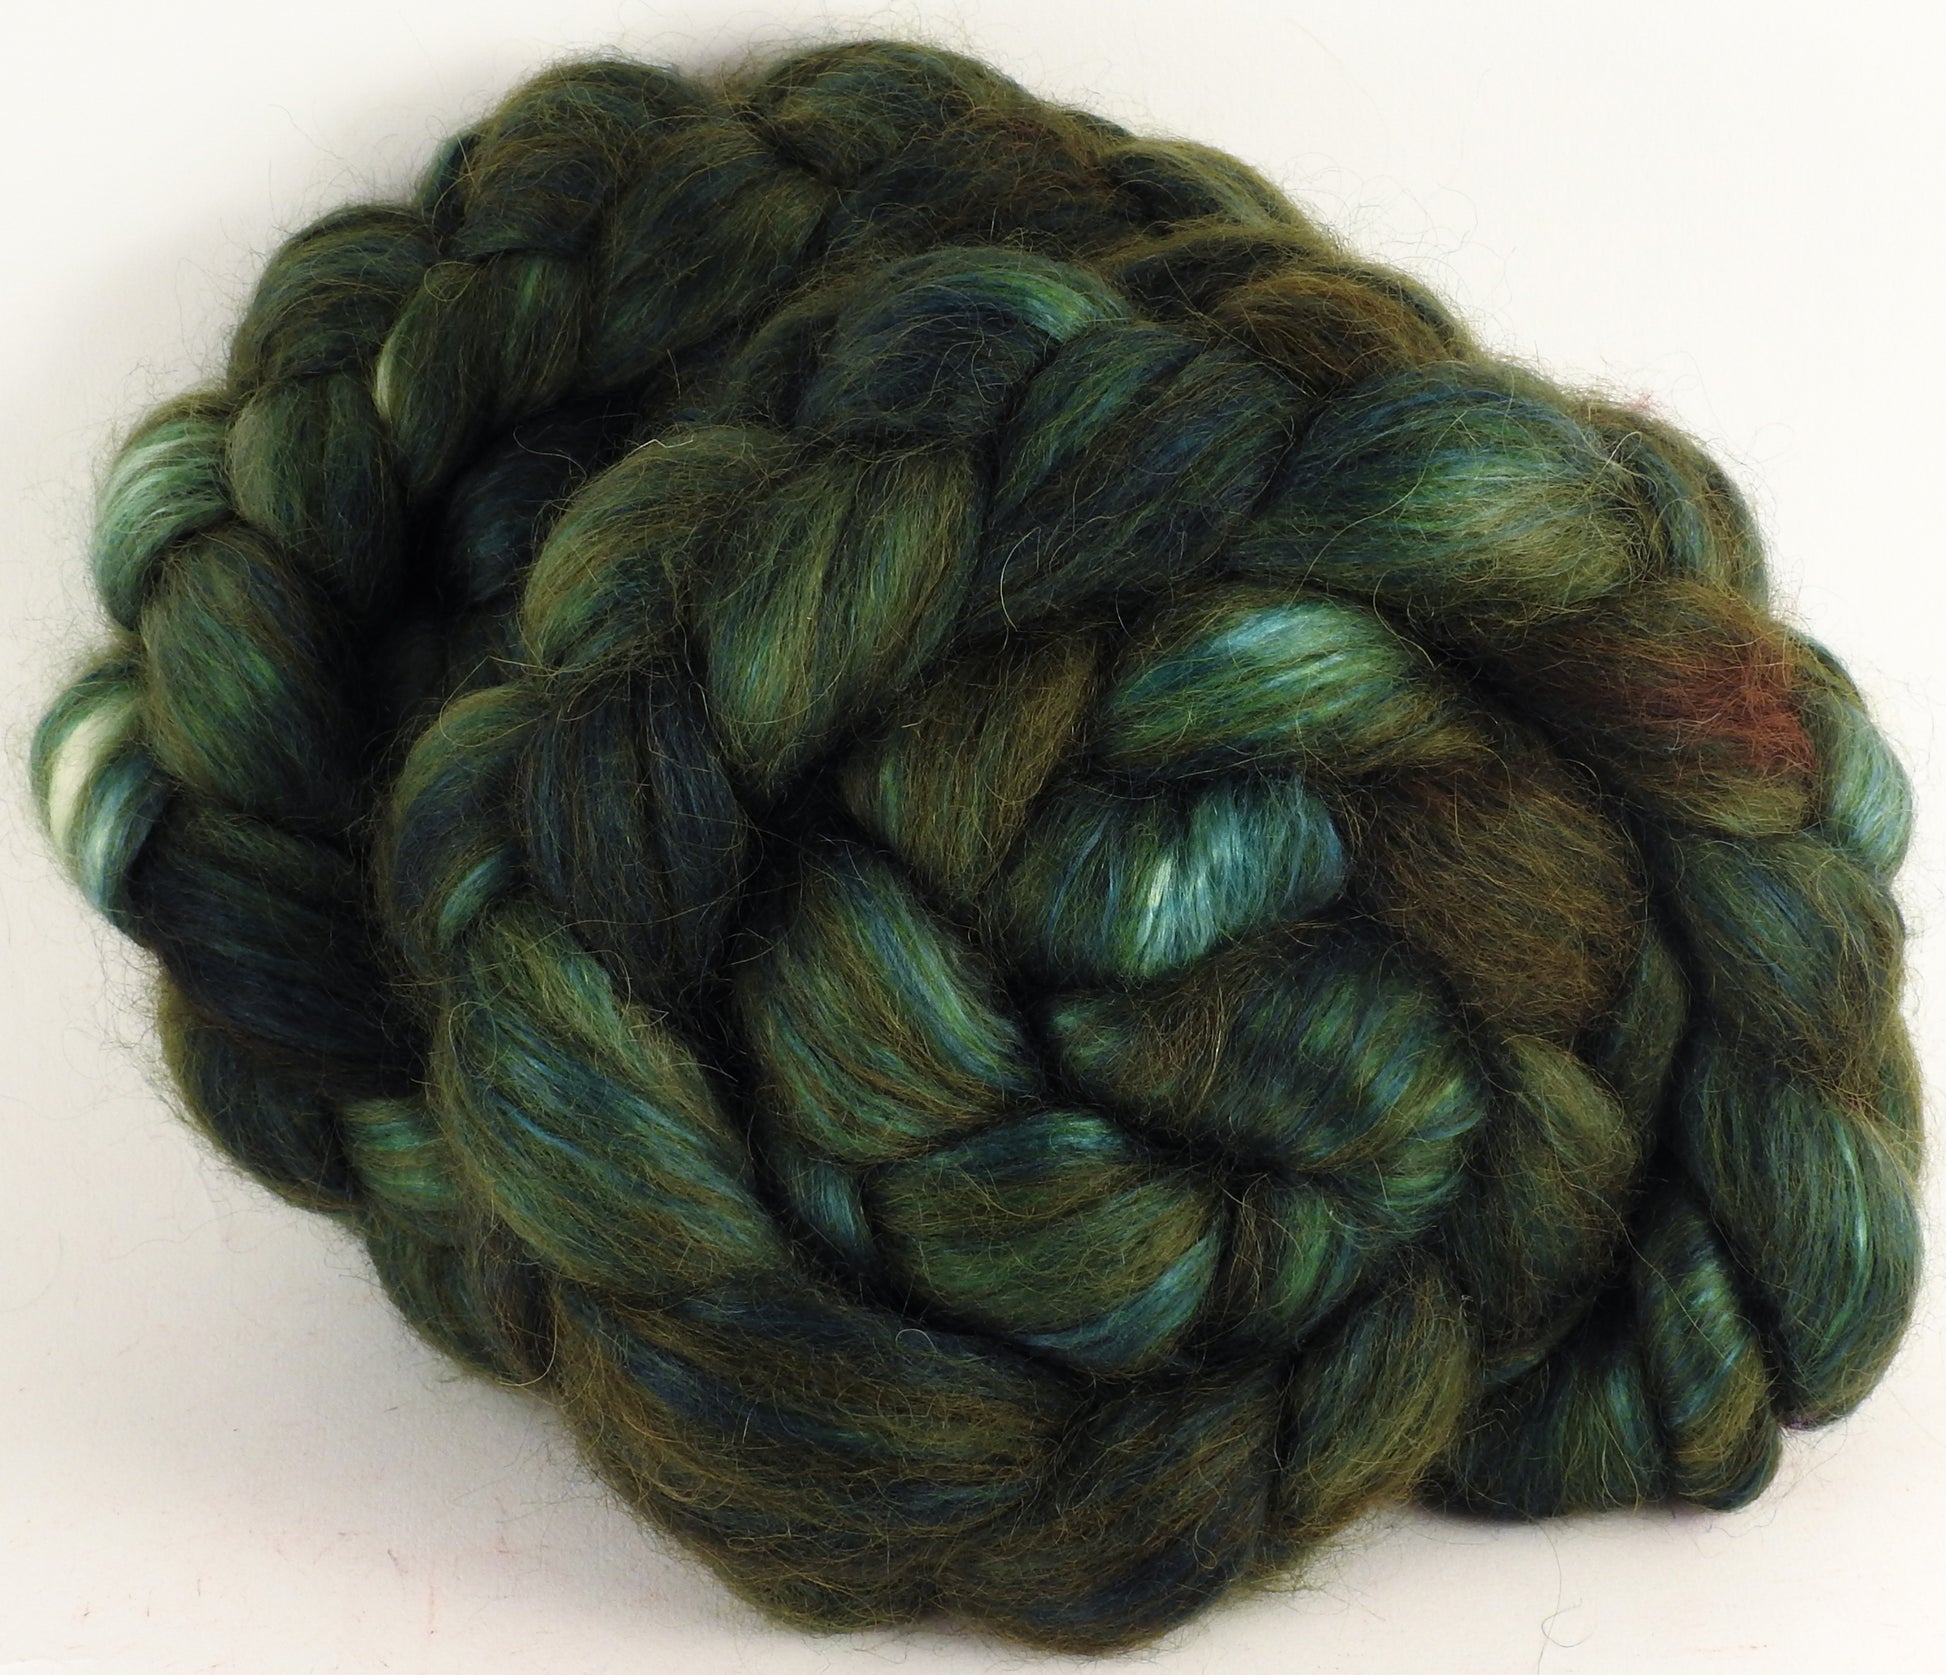 Hand-dyed wensleydale/ mulberry silk roving (65/35) - Zucchini - (5.3 oz.) - Inglenook Fibers